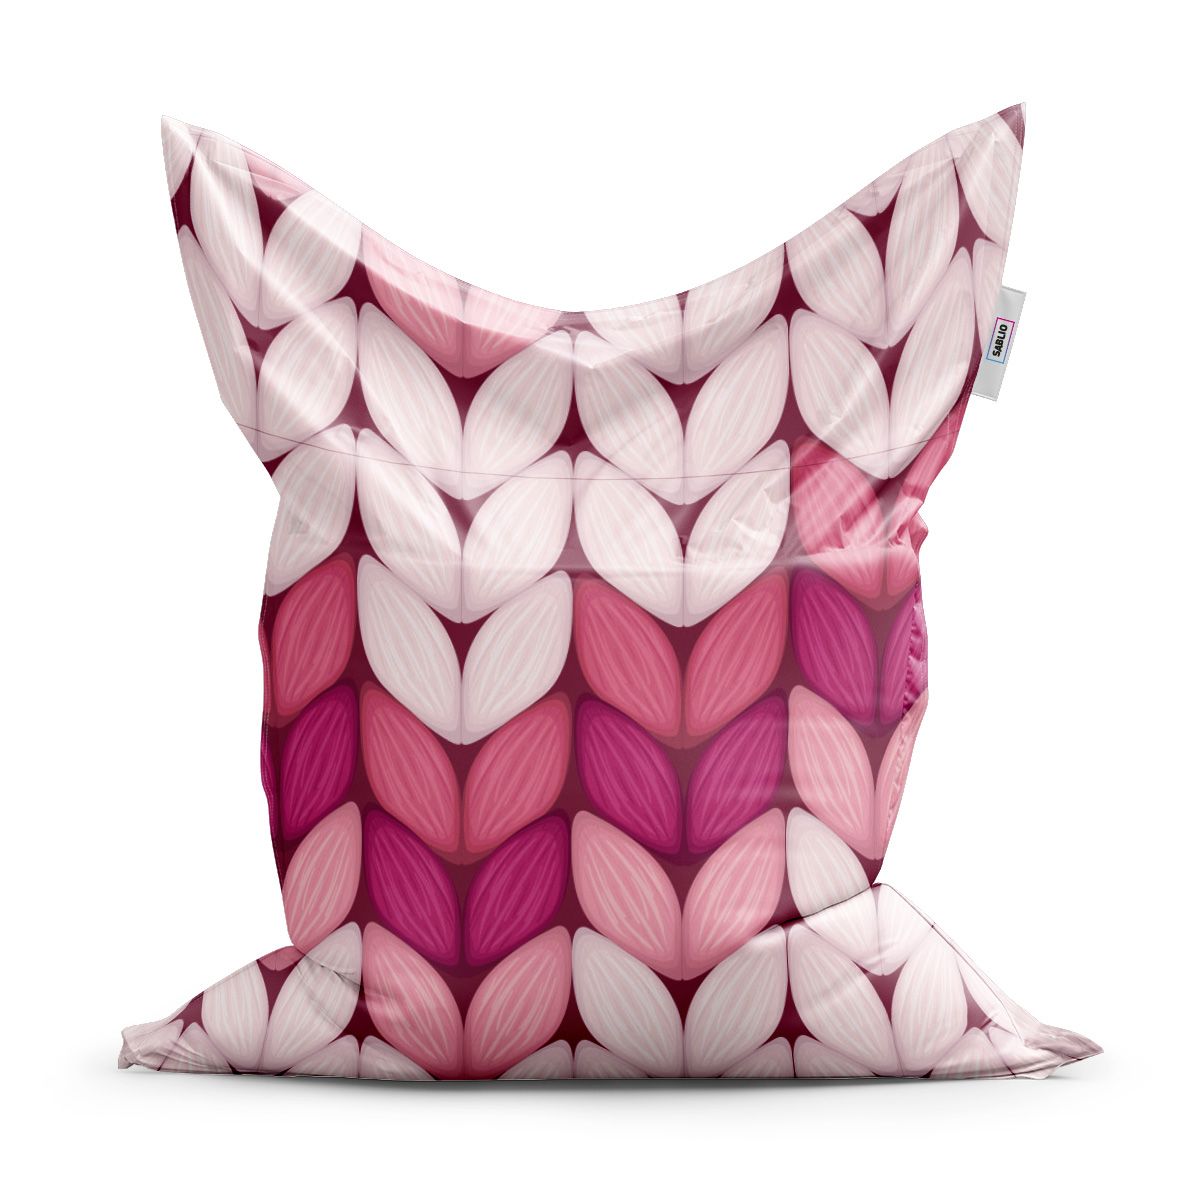 Sedací vak SABLIO - Tříbarevné růžové pletení 150x100 cm - E-shop Sablo s.r.o.